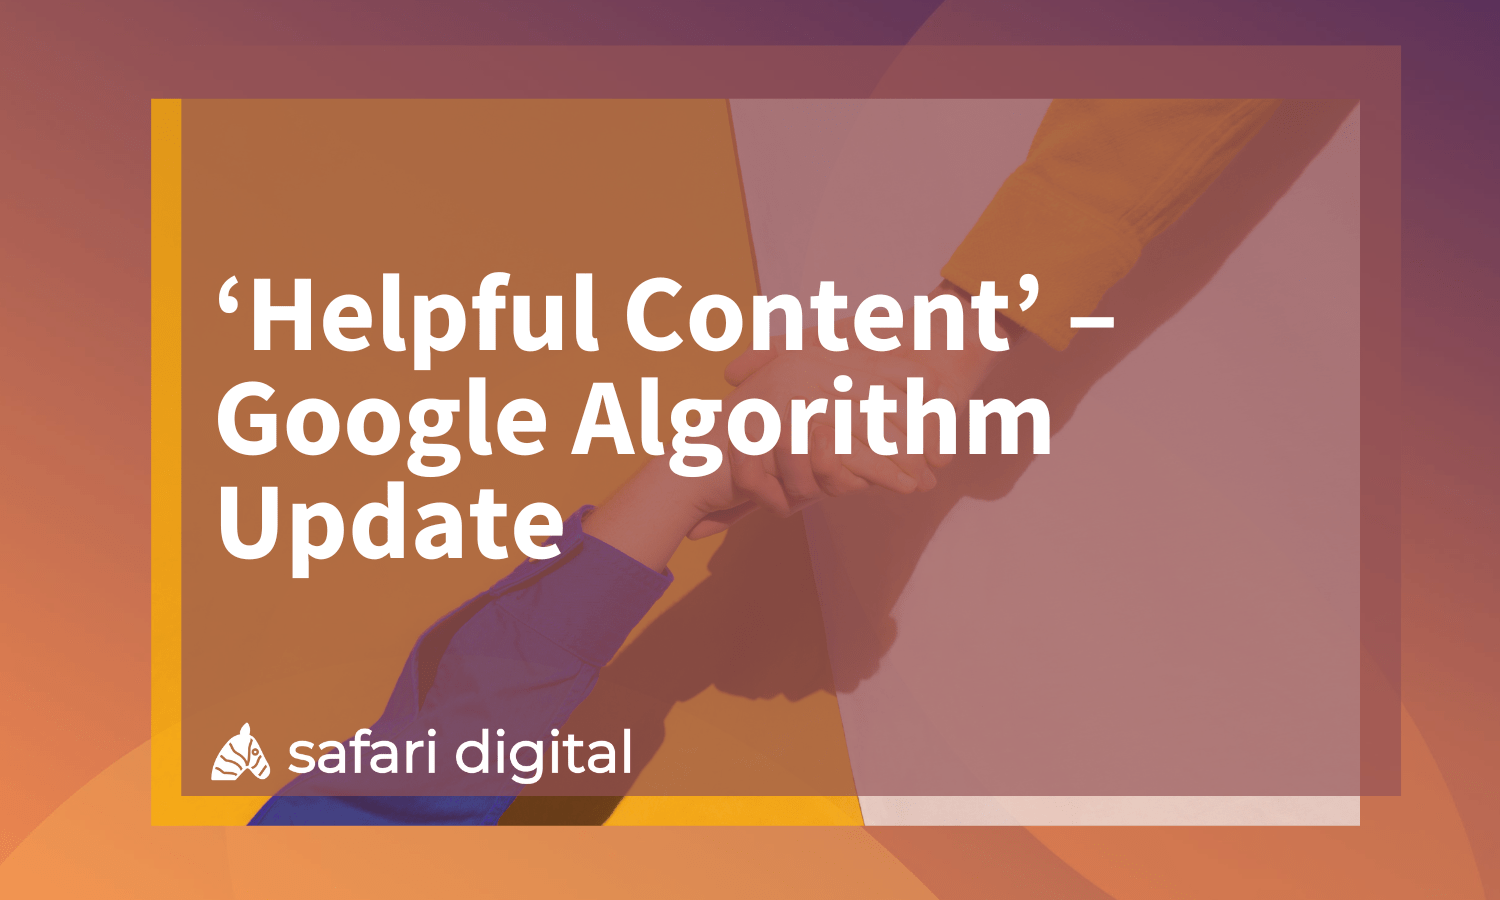 ‘Helpful Content’ – Google Algorithm Update is Coming